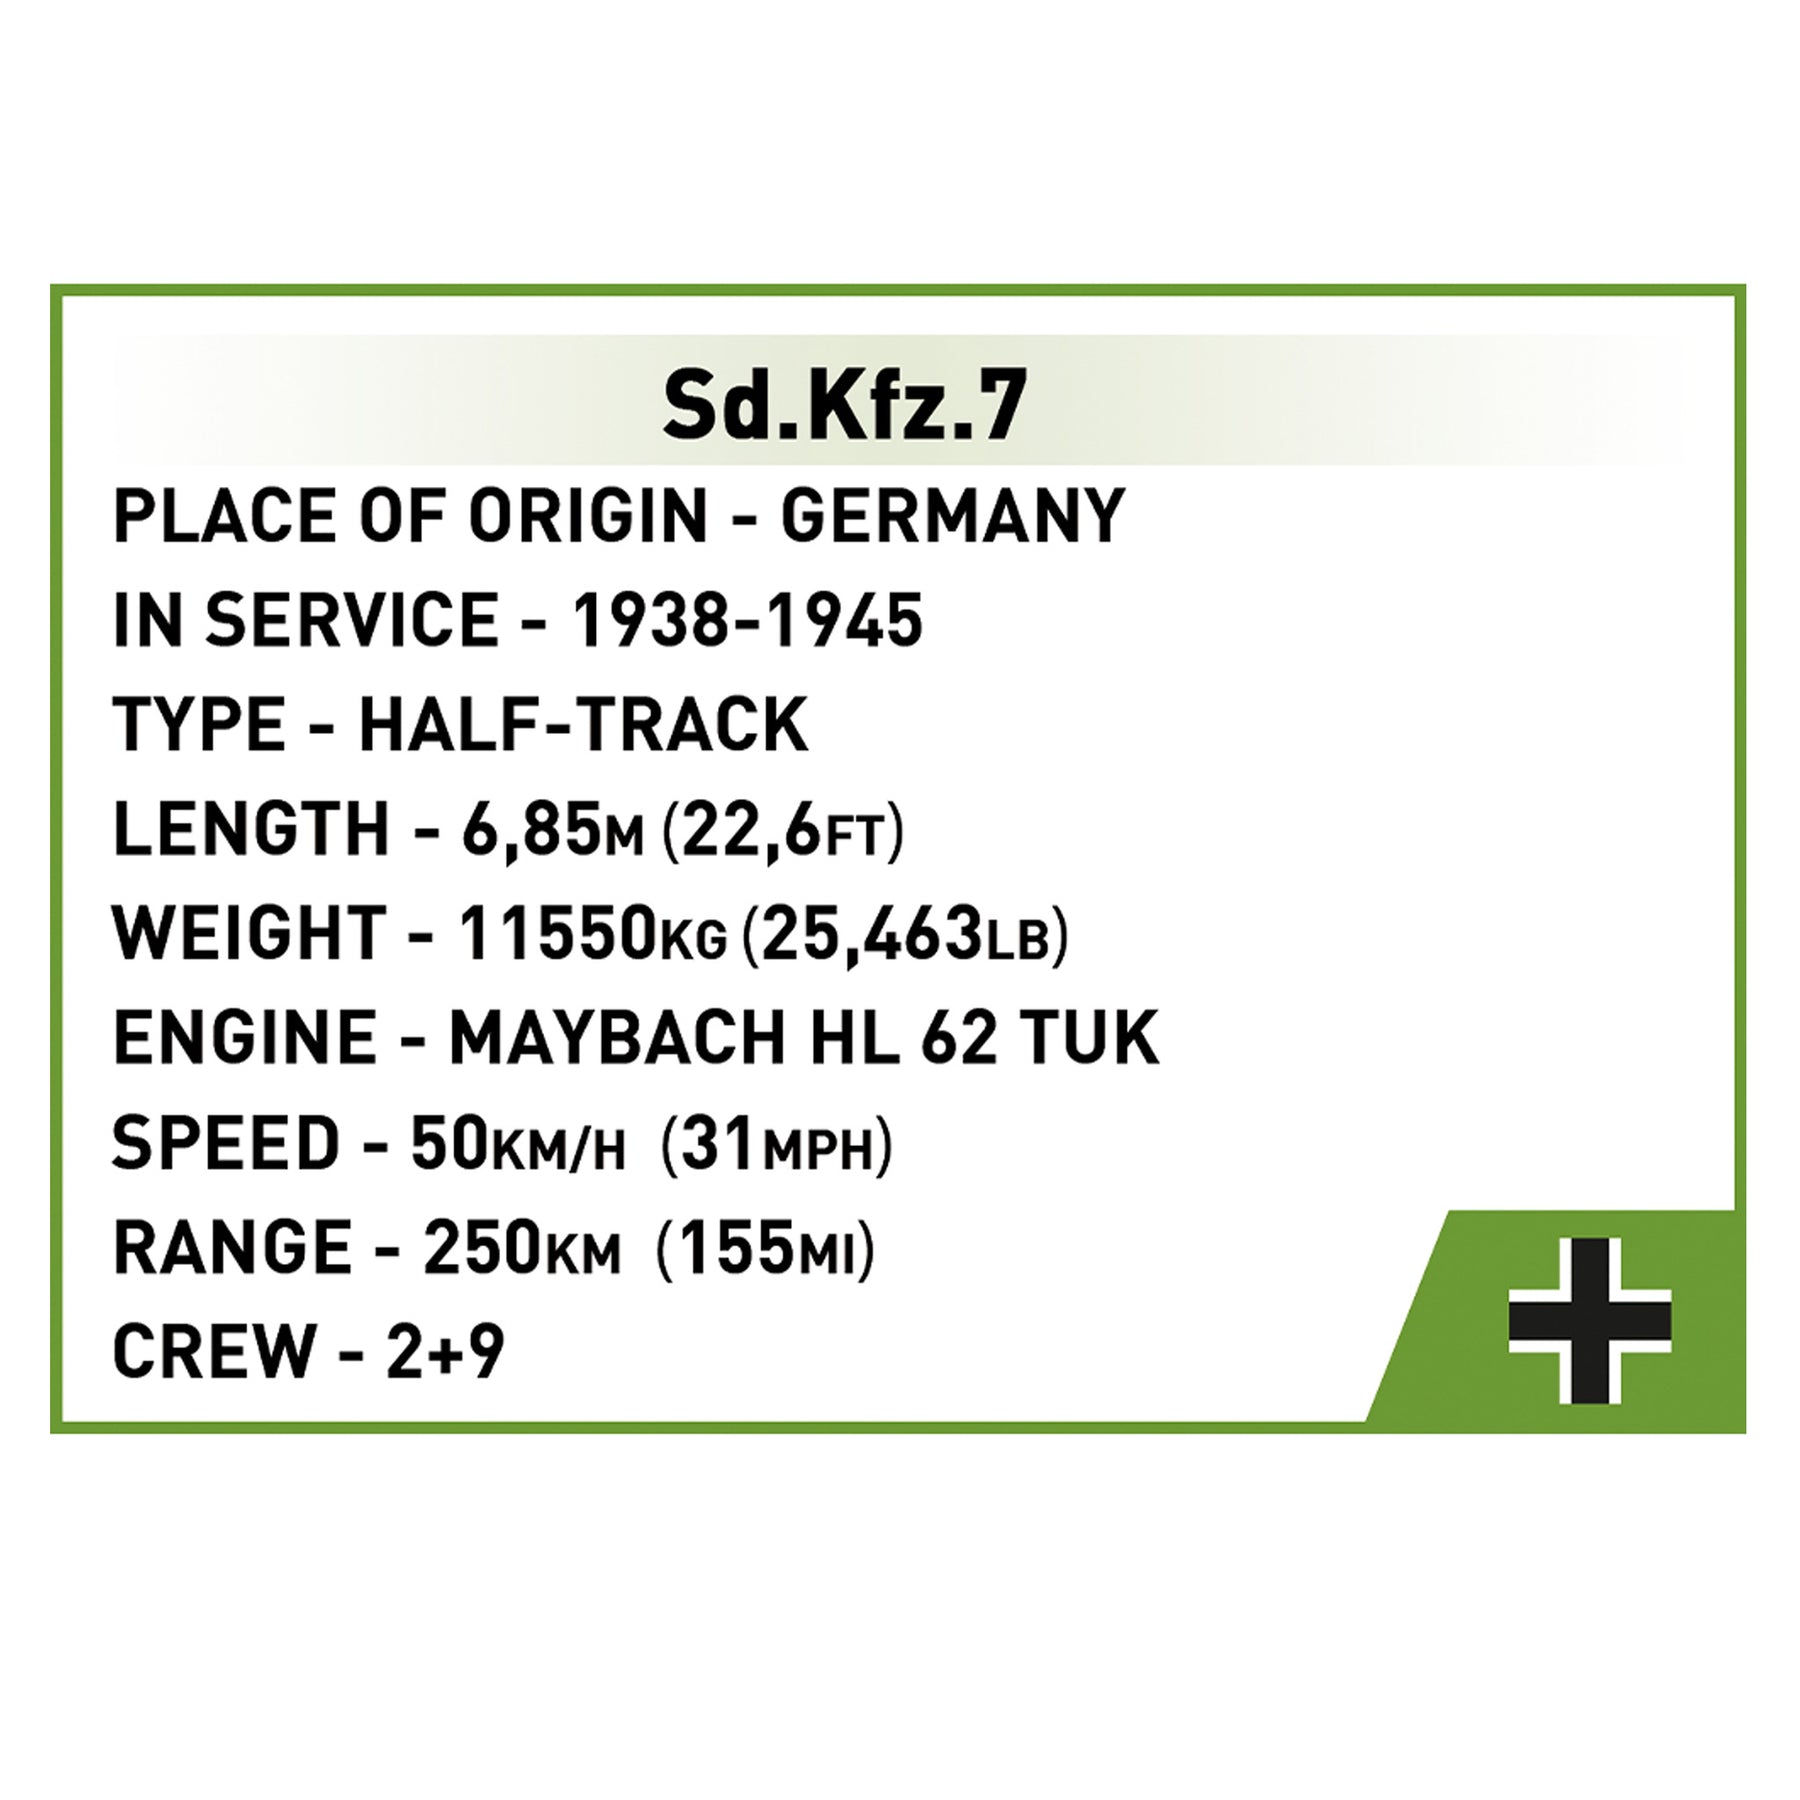 2275 - Sonder Kfz. 7 Half-Track (Cobi)